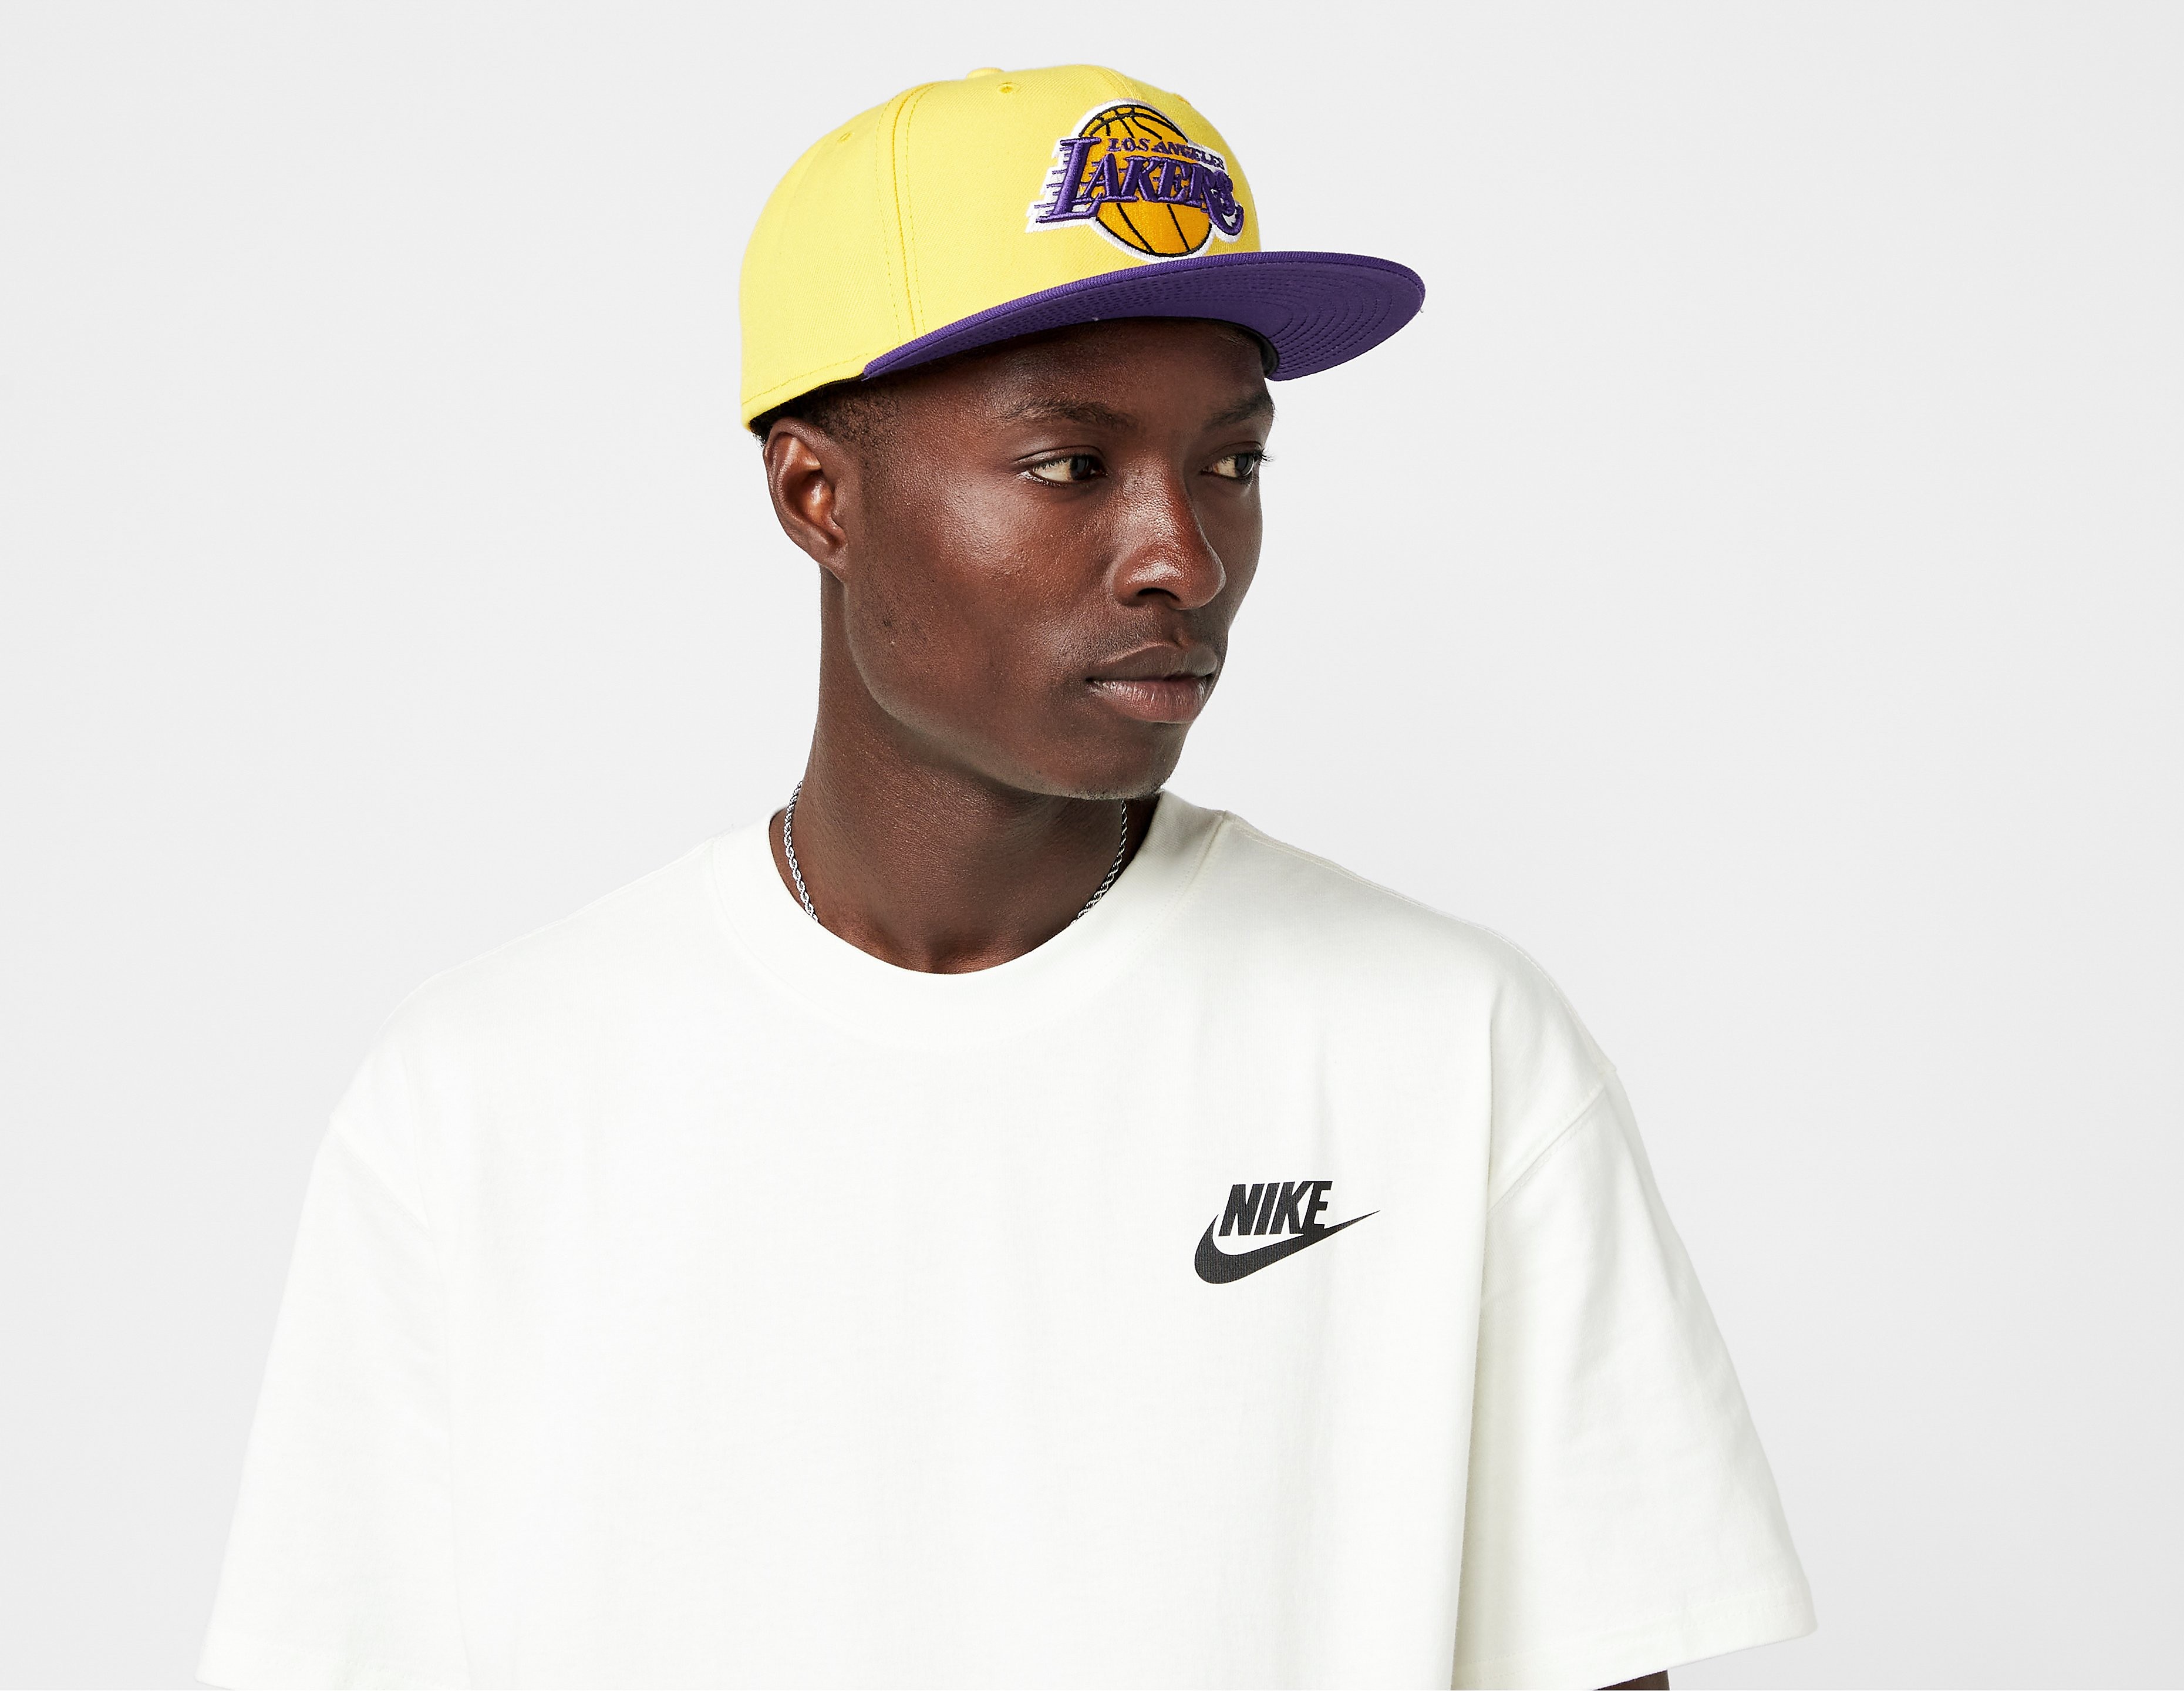 New Era LA Lakers Essential Yellow 59FIFTY Cap